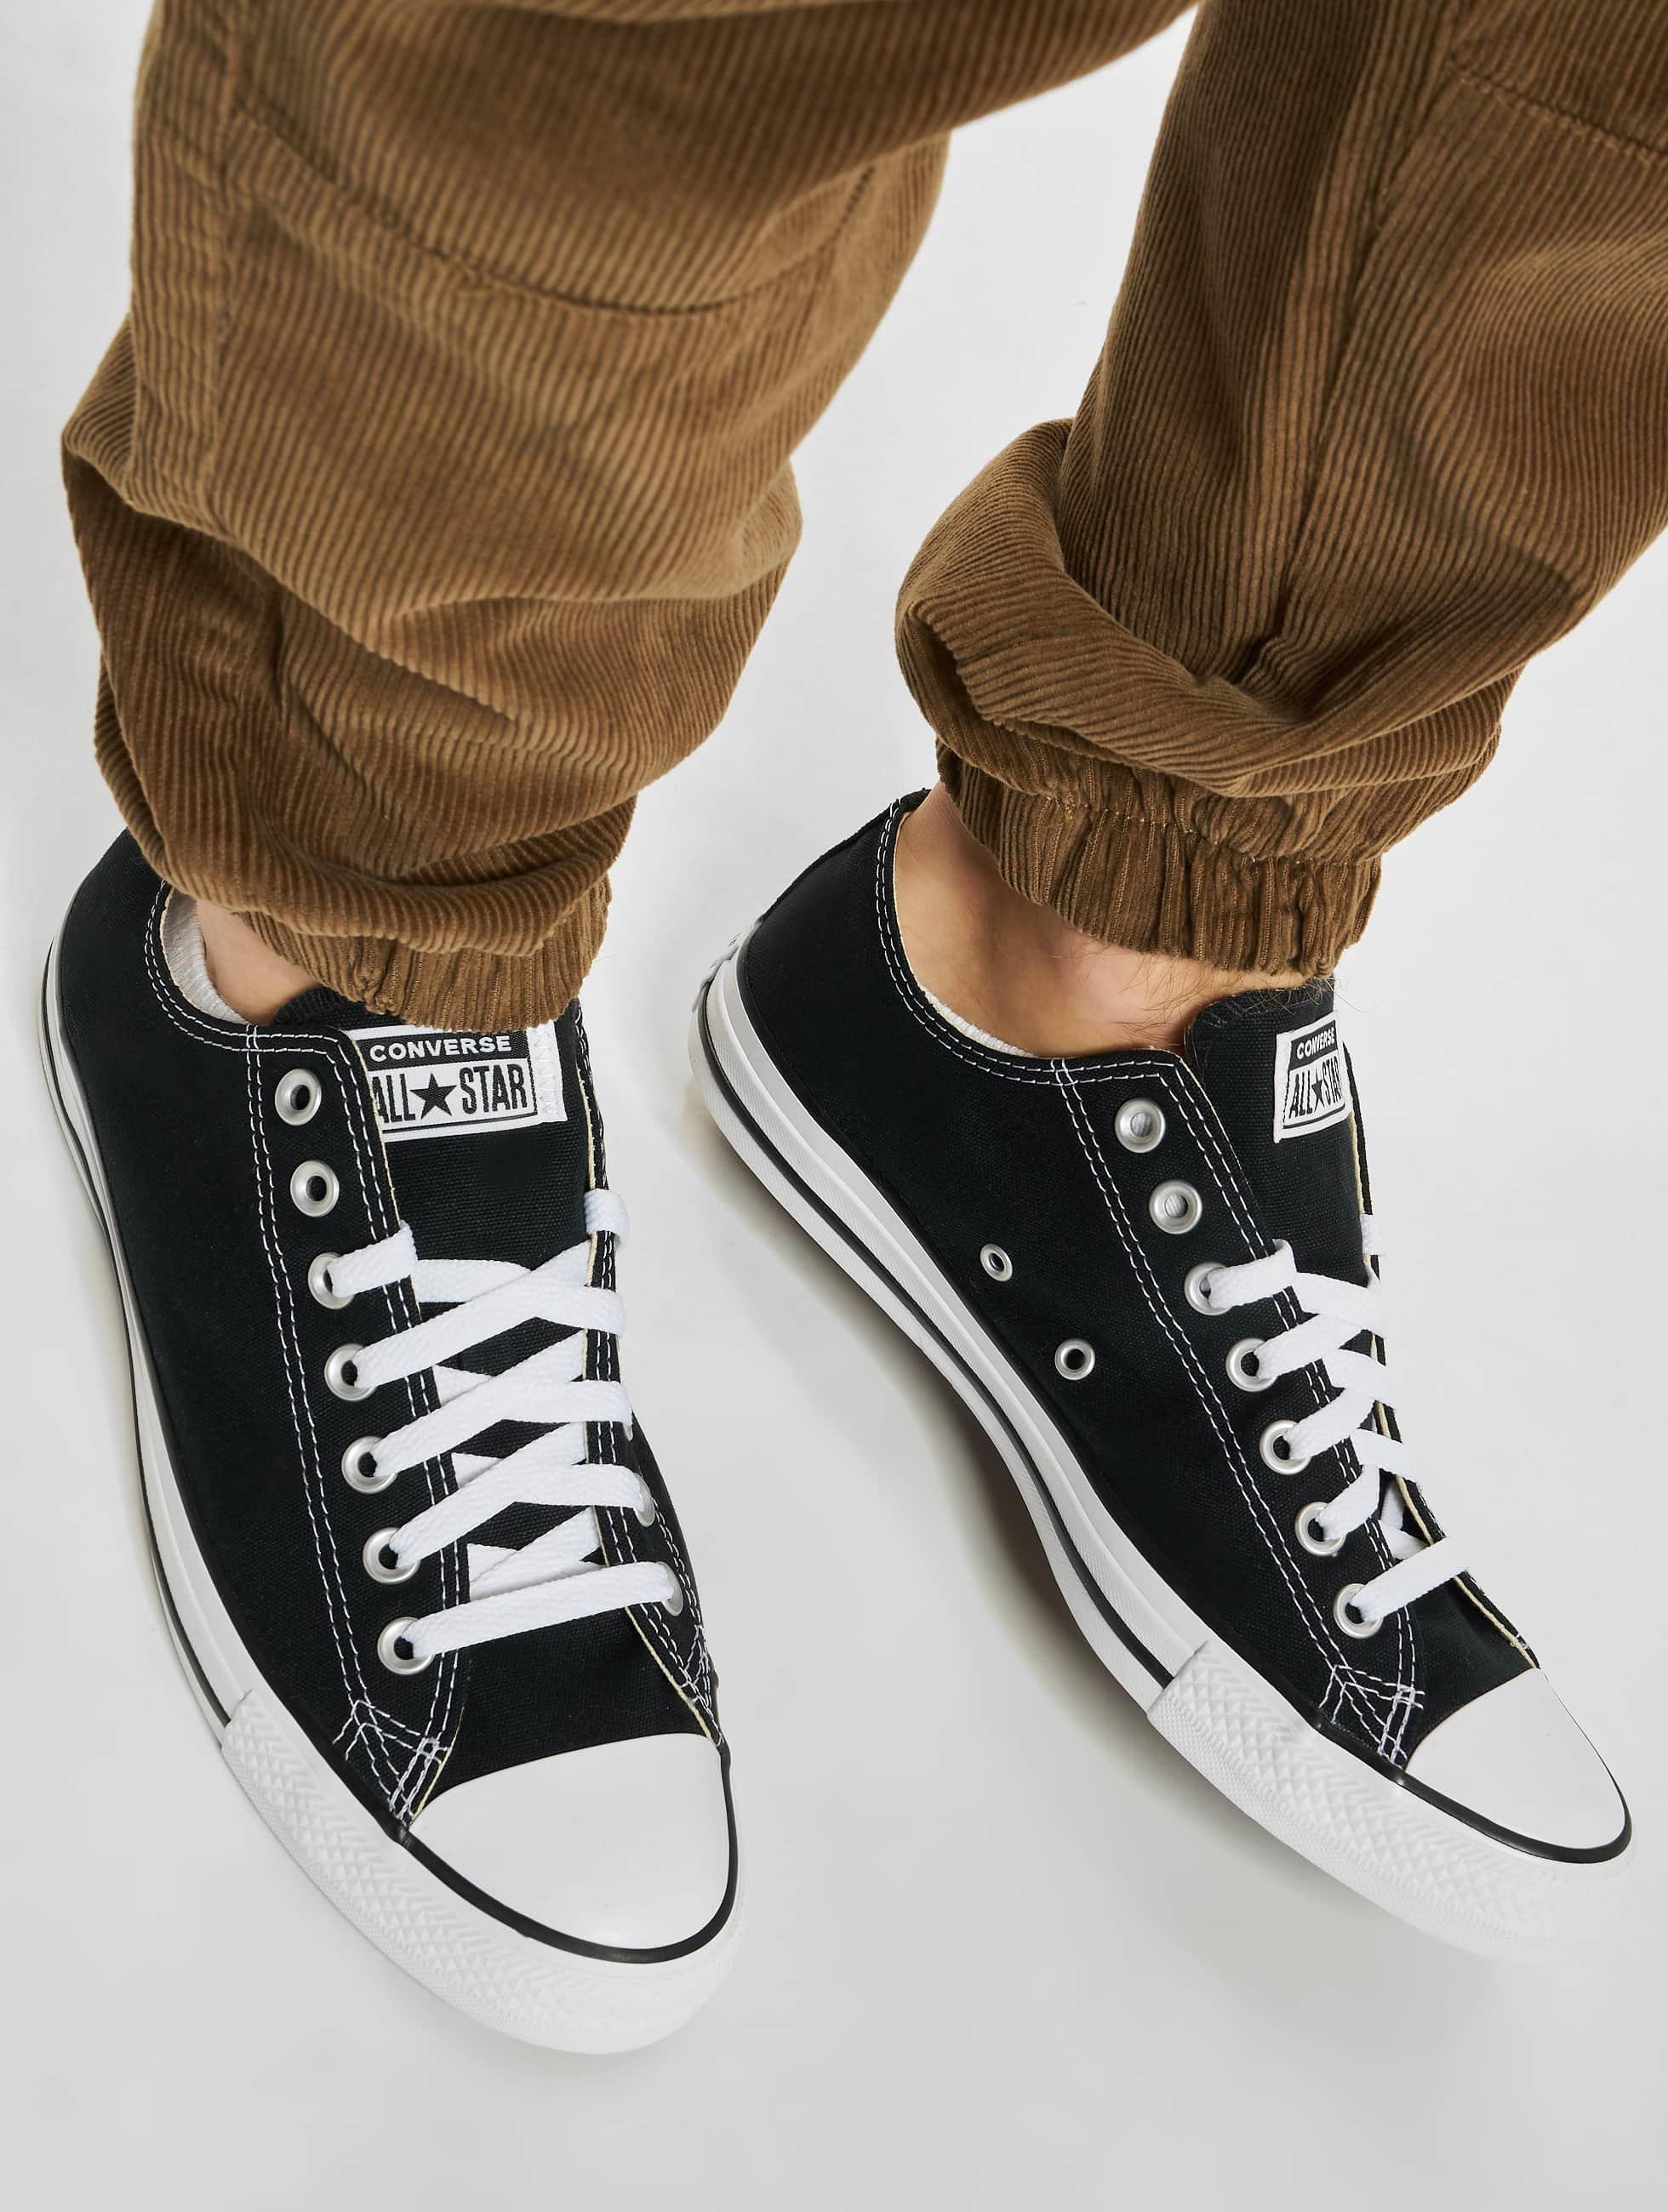 sarcoom Extreem belangrijk Verplicht Converse schoen / sneaker All Star Ox Canvas Chucks in zwart 122834